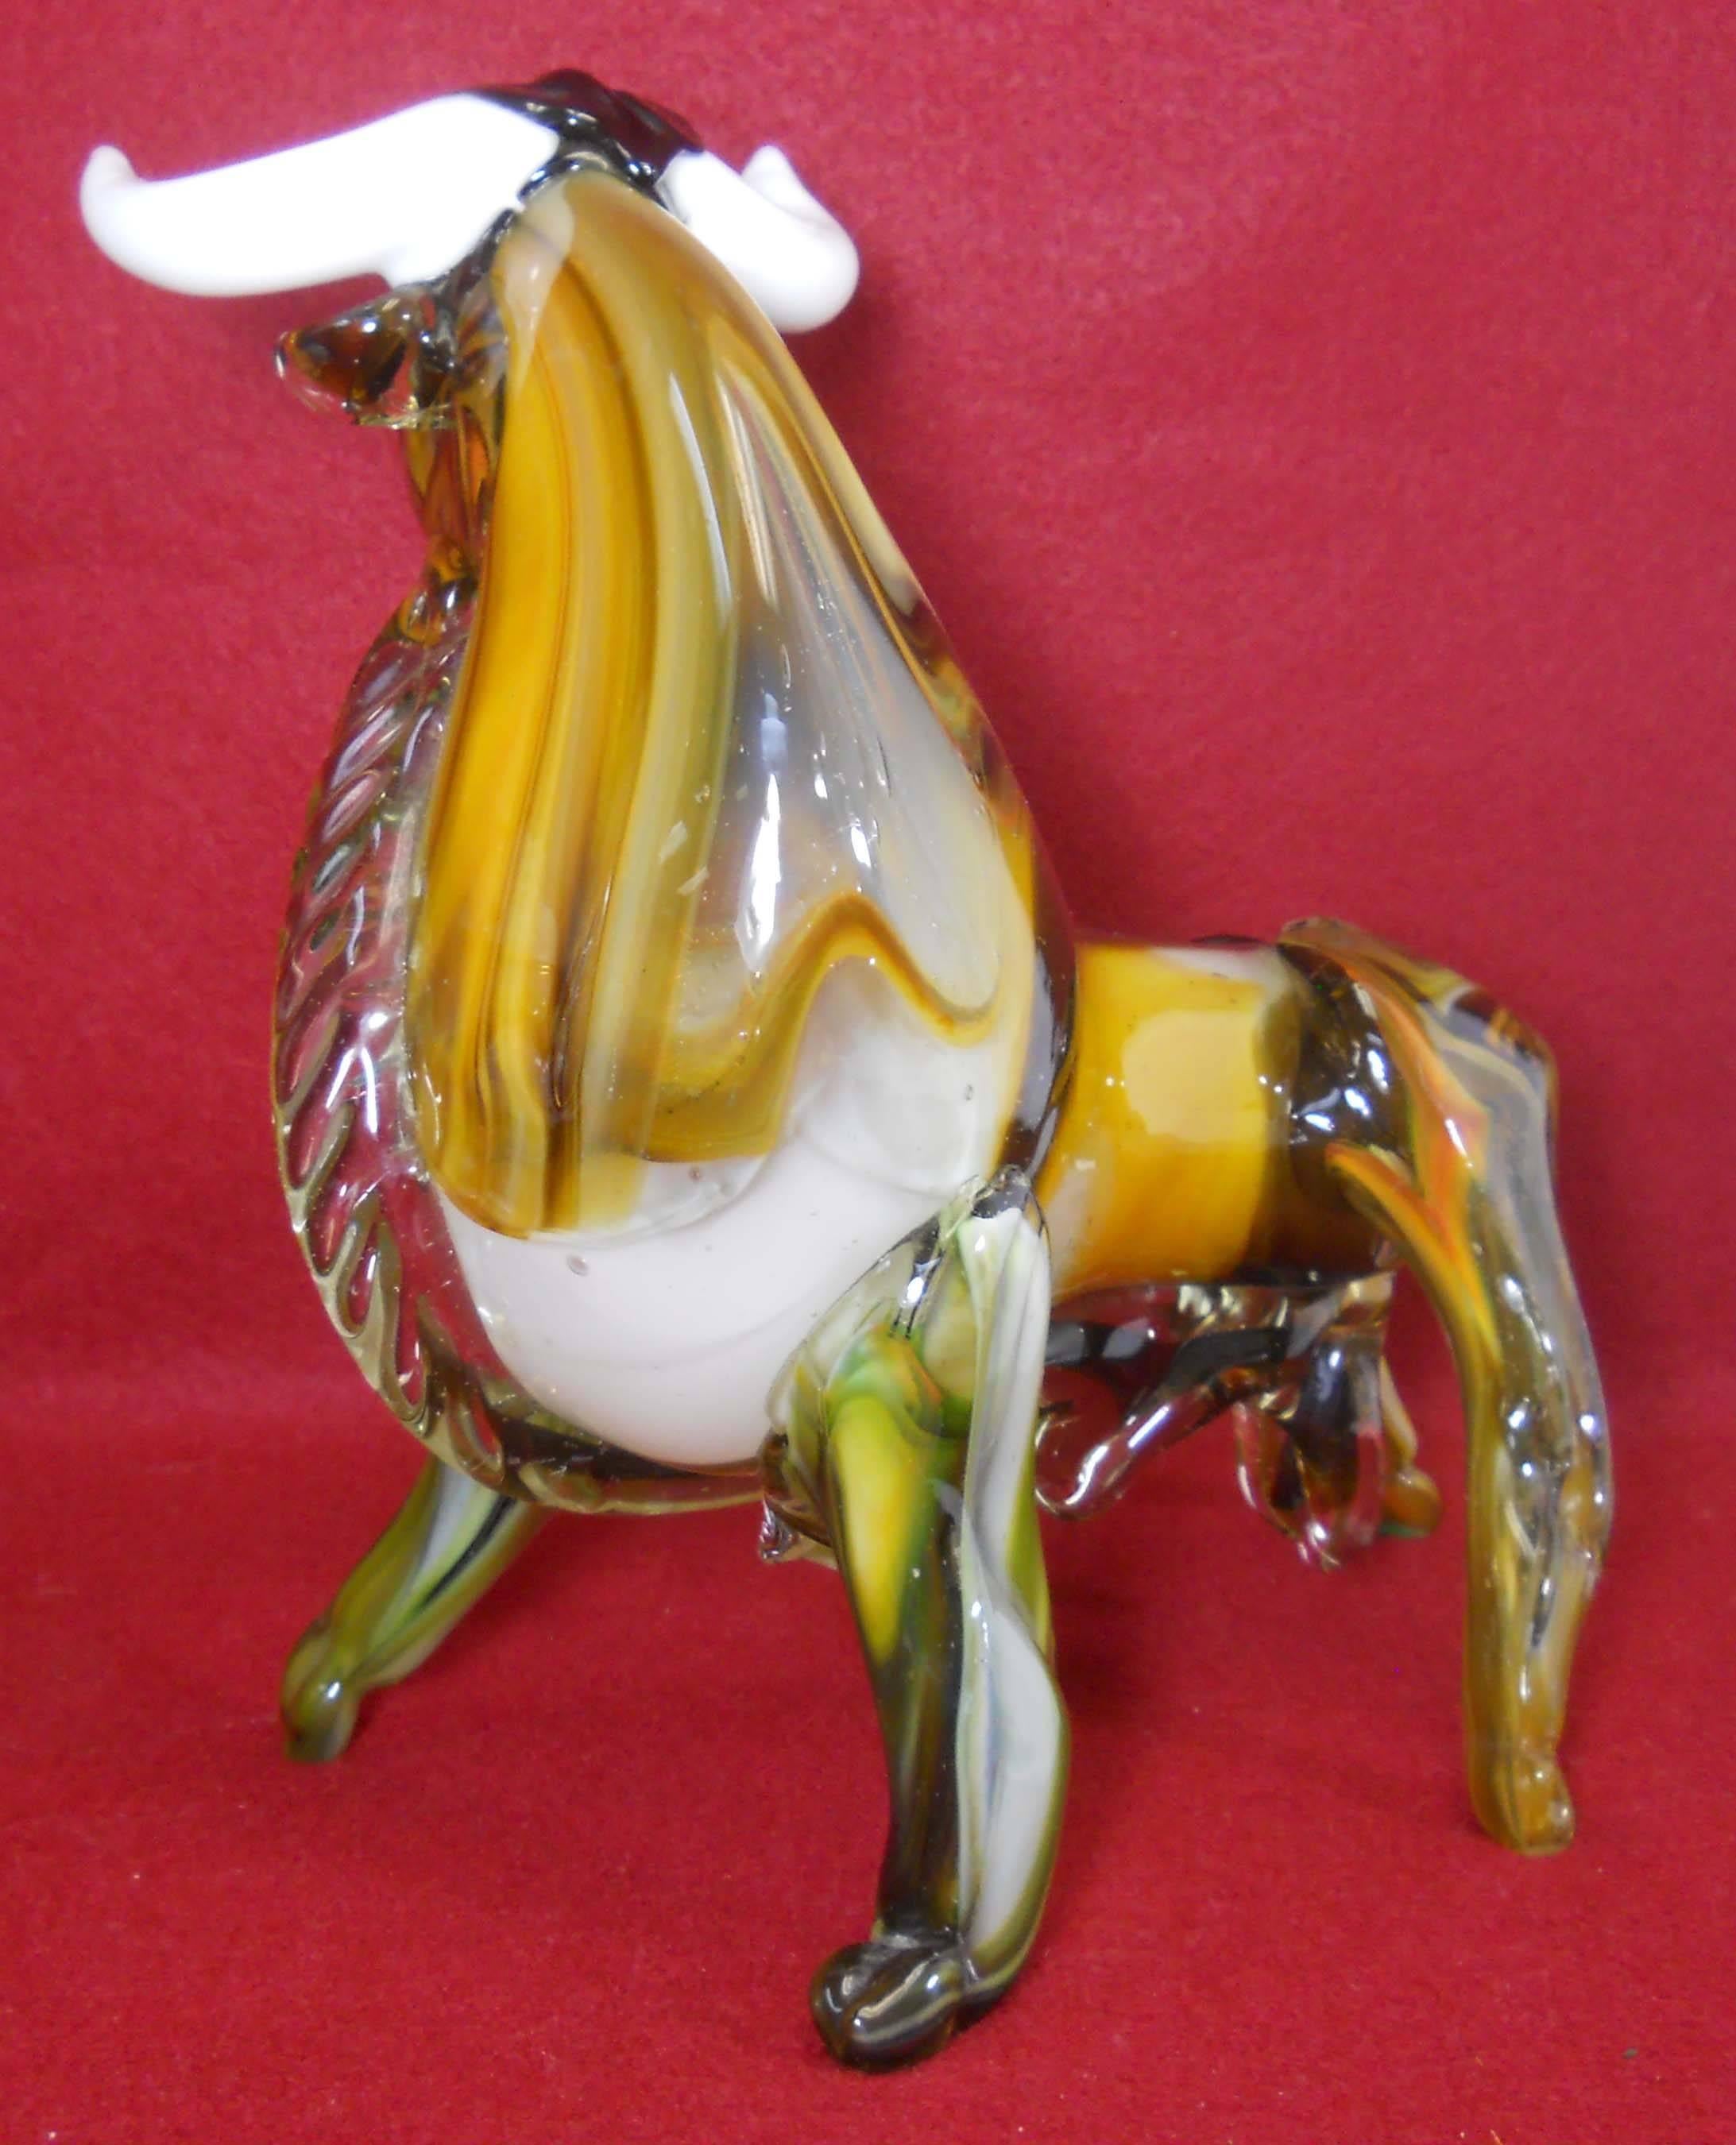 Italian Murano Glass Bull Figurine, Motled Coloring with White Horns